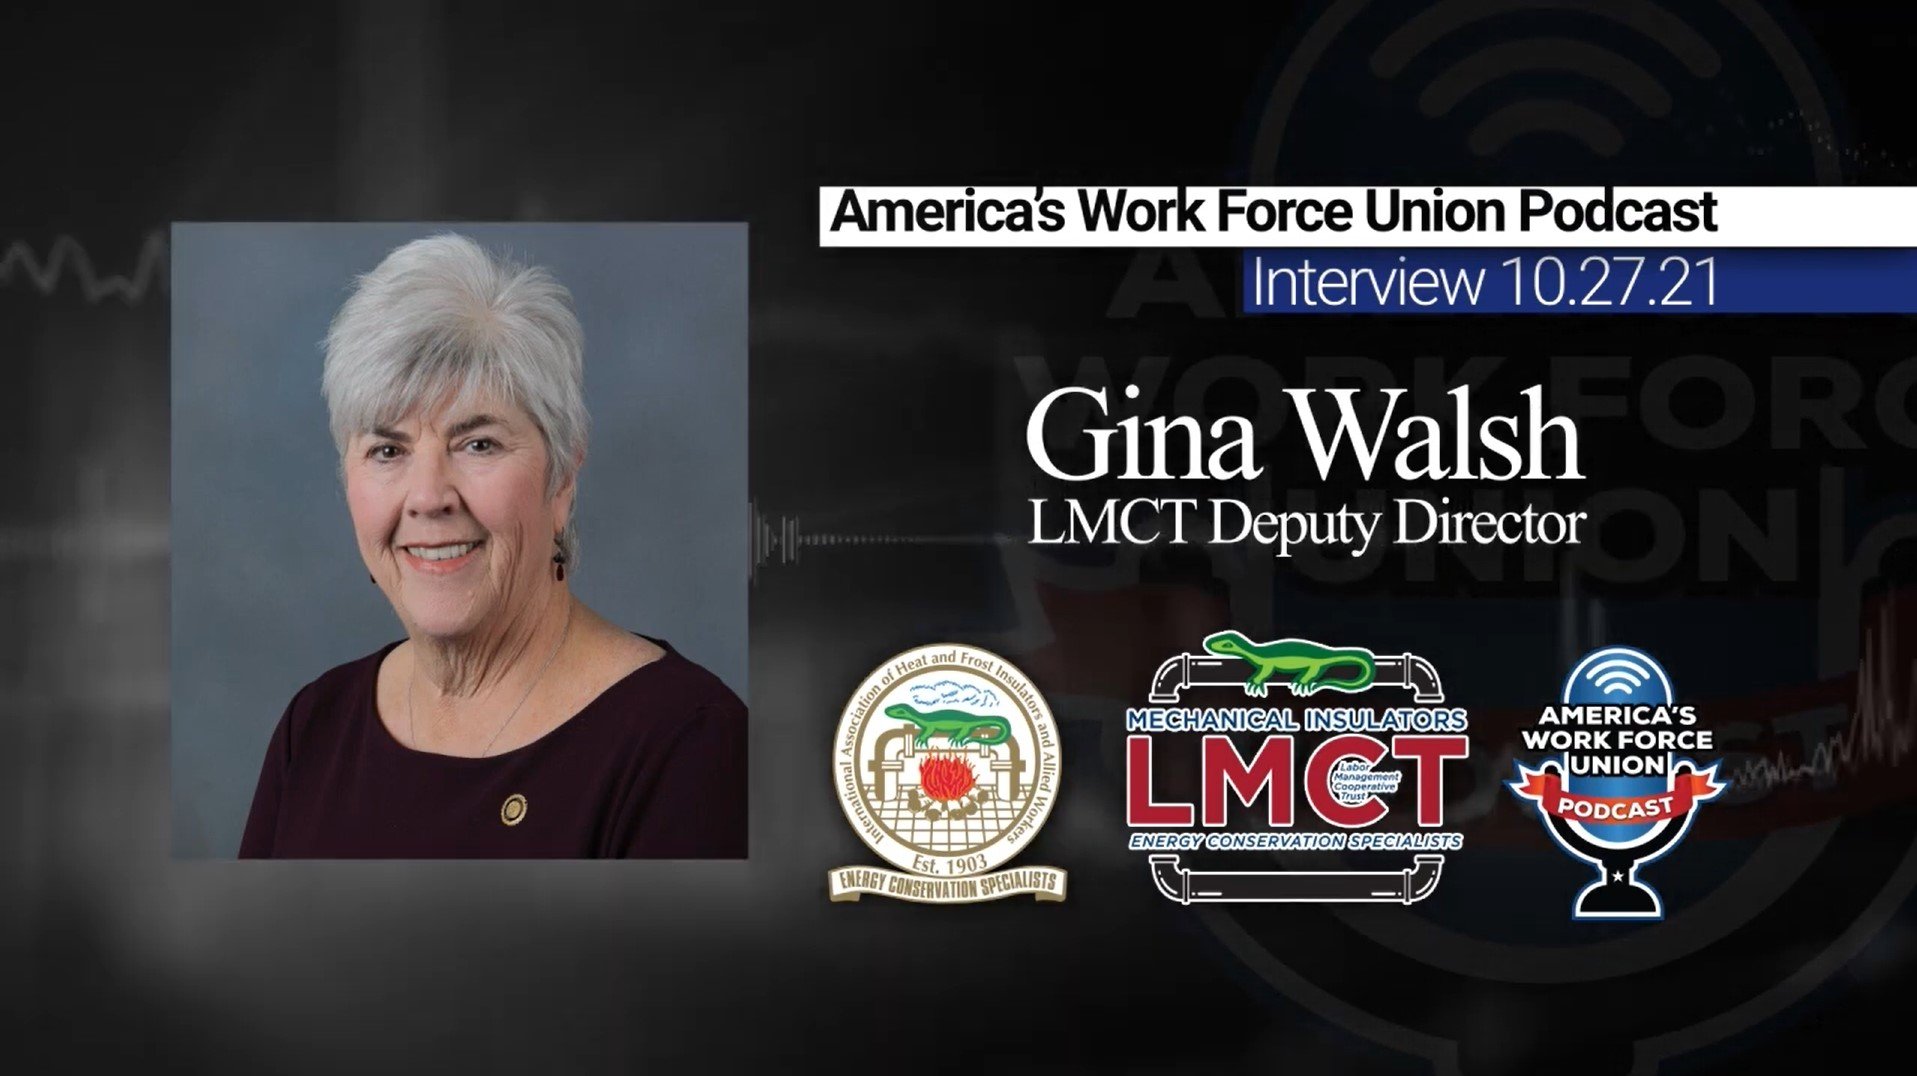 Insulators Union - Mechanical Insulators LMCT Deputy Director and Local 1 retired Sister Gina Walsh